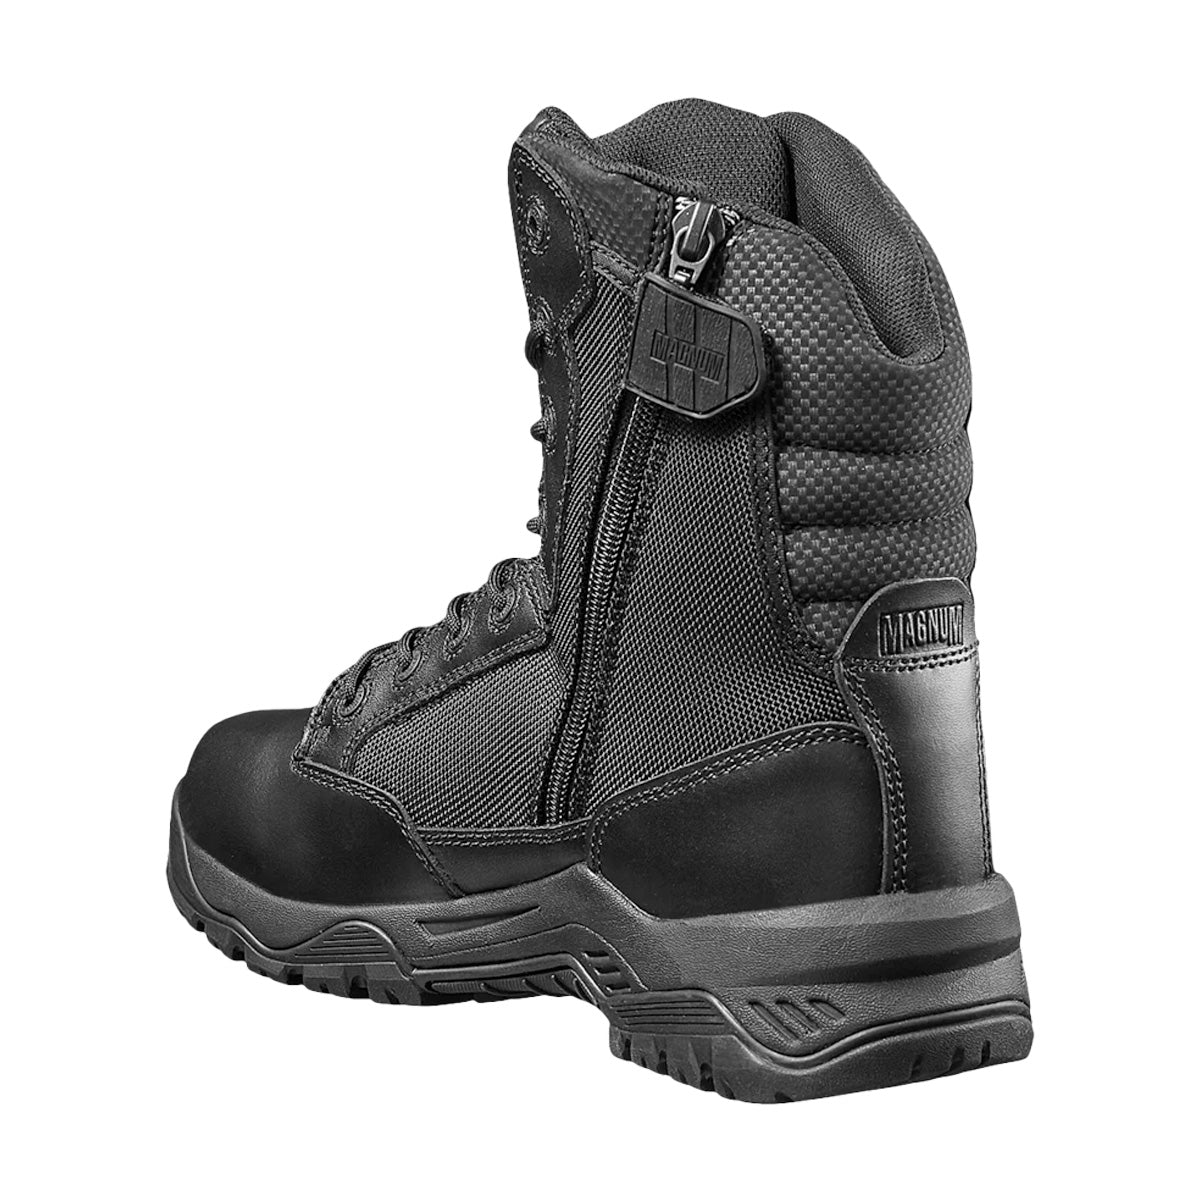 Magnum Strike Force 8.0 Side-Zip Composite Toe Women's Boots Black Tactical Distributors Ltd New Zealand